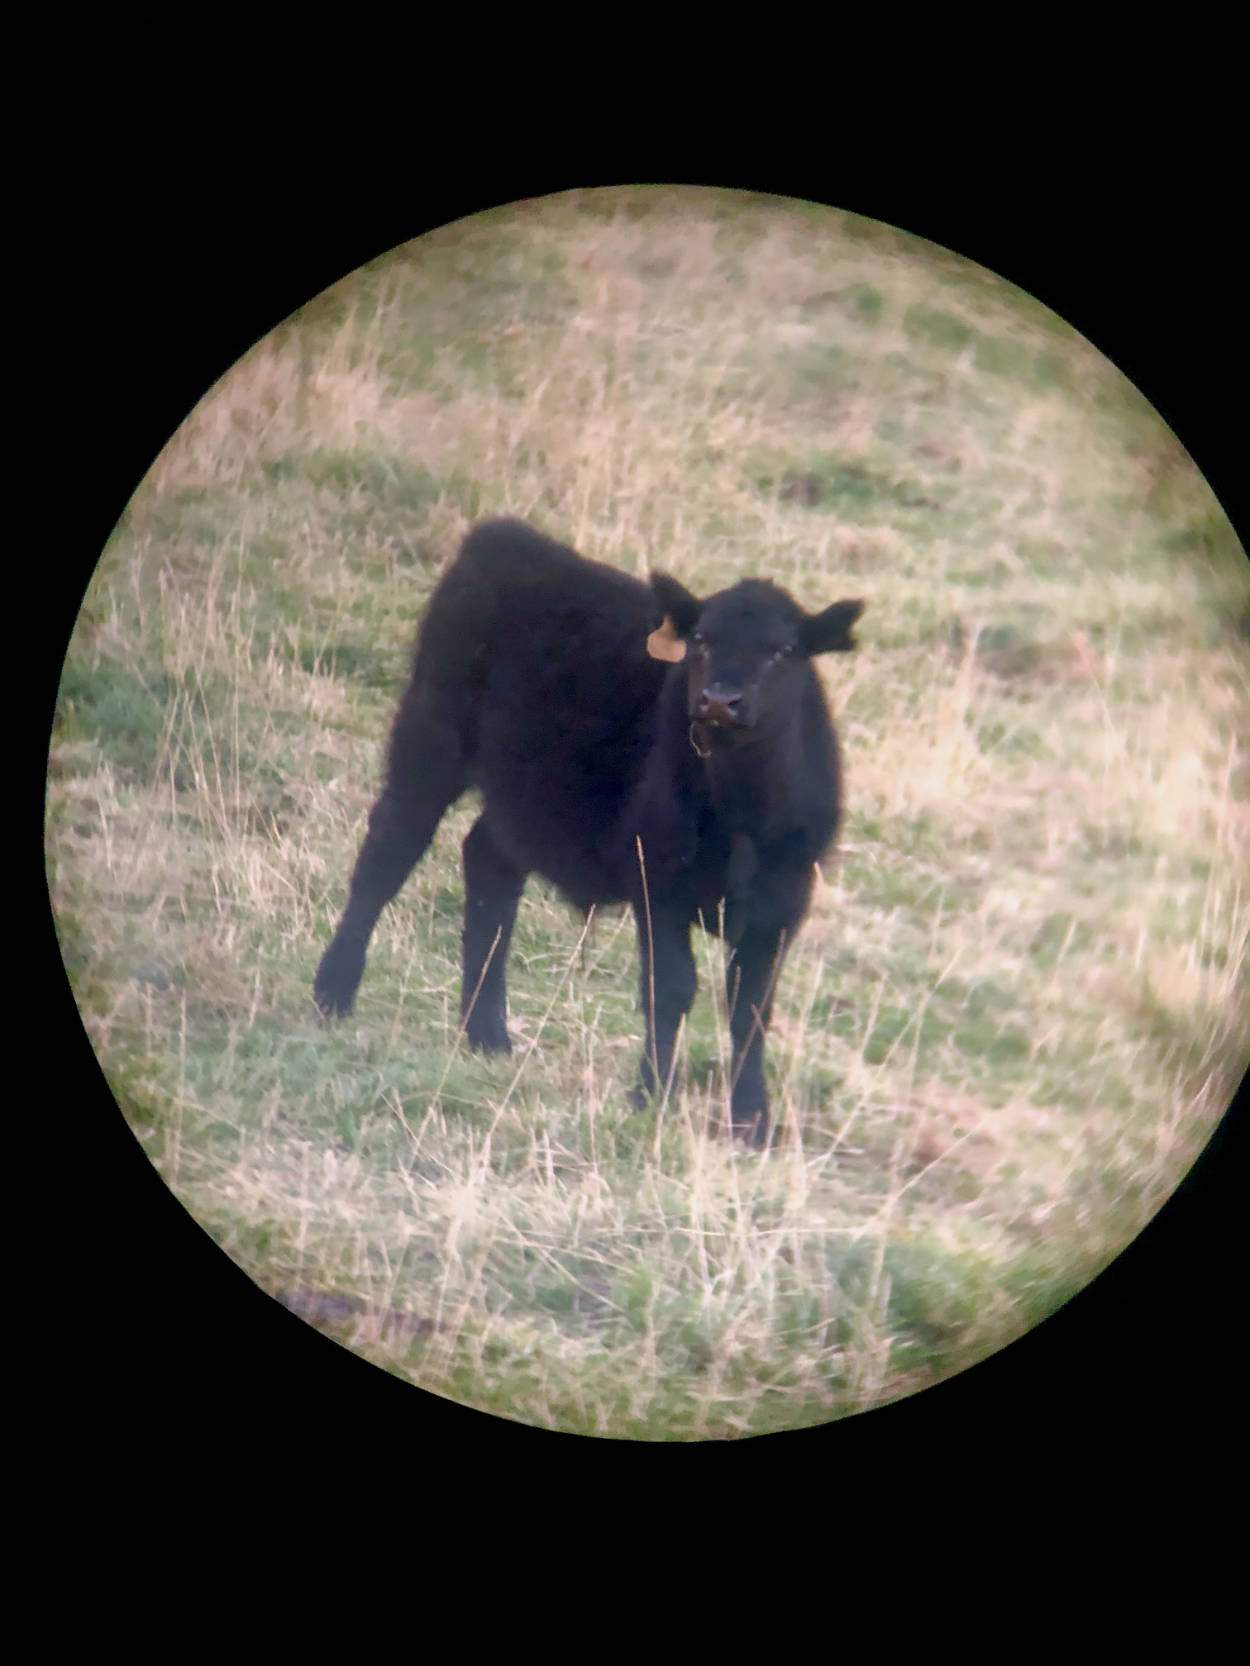 A black cow through binoculars